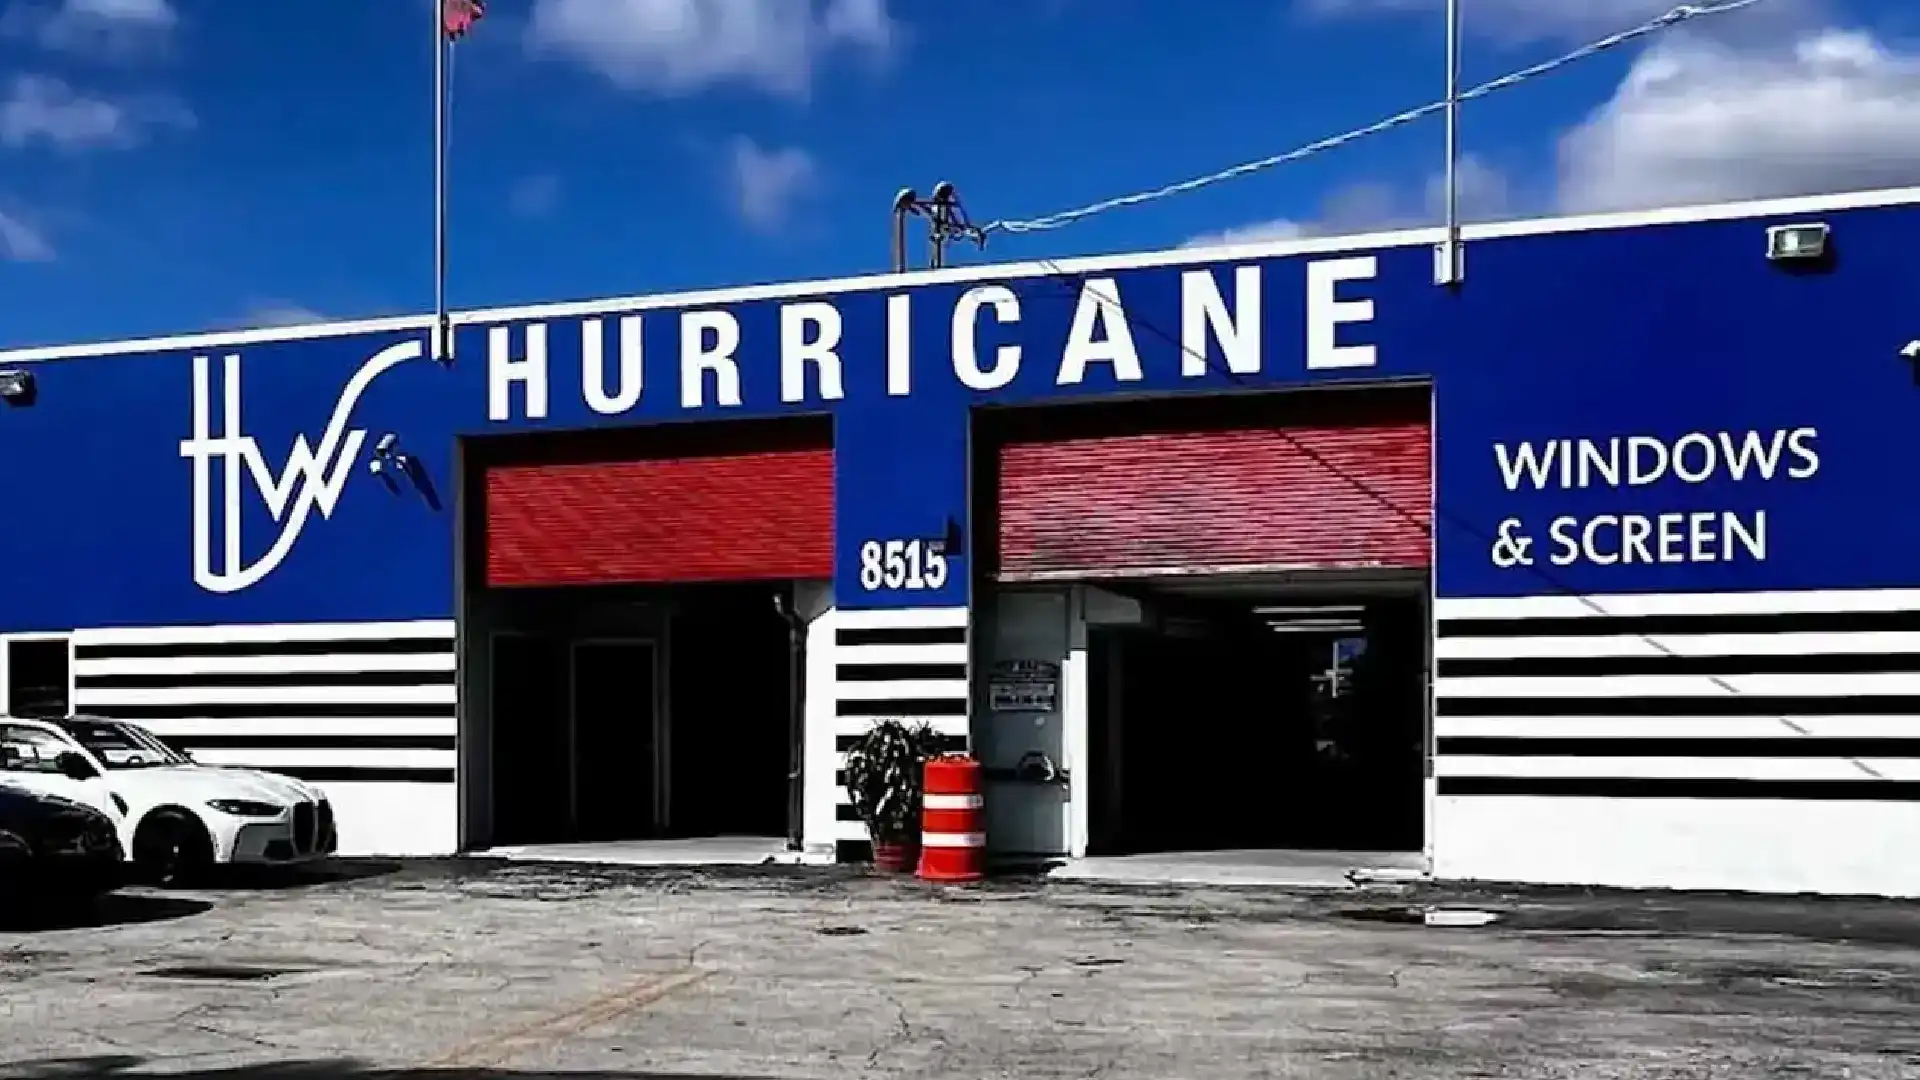 Hurricane Windows & Screens storefront.